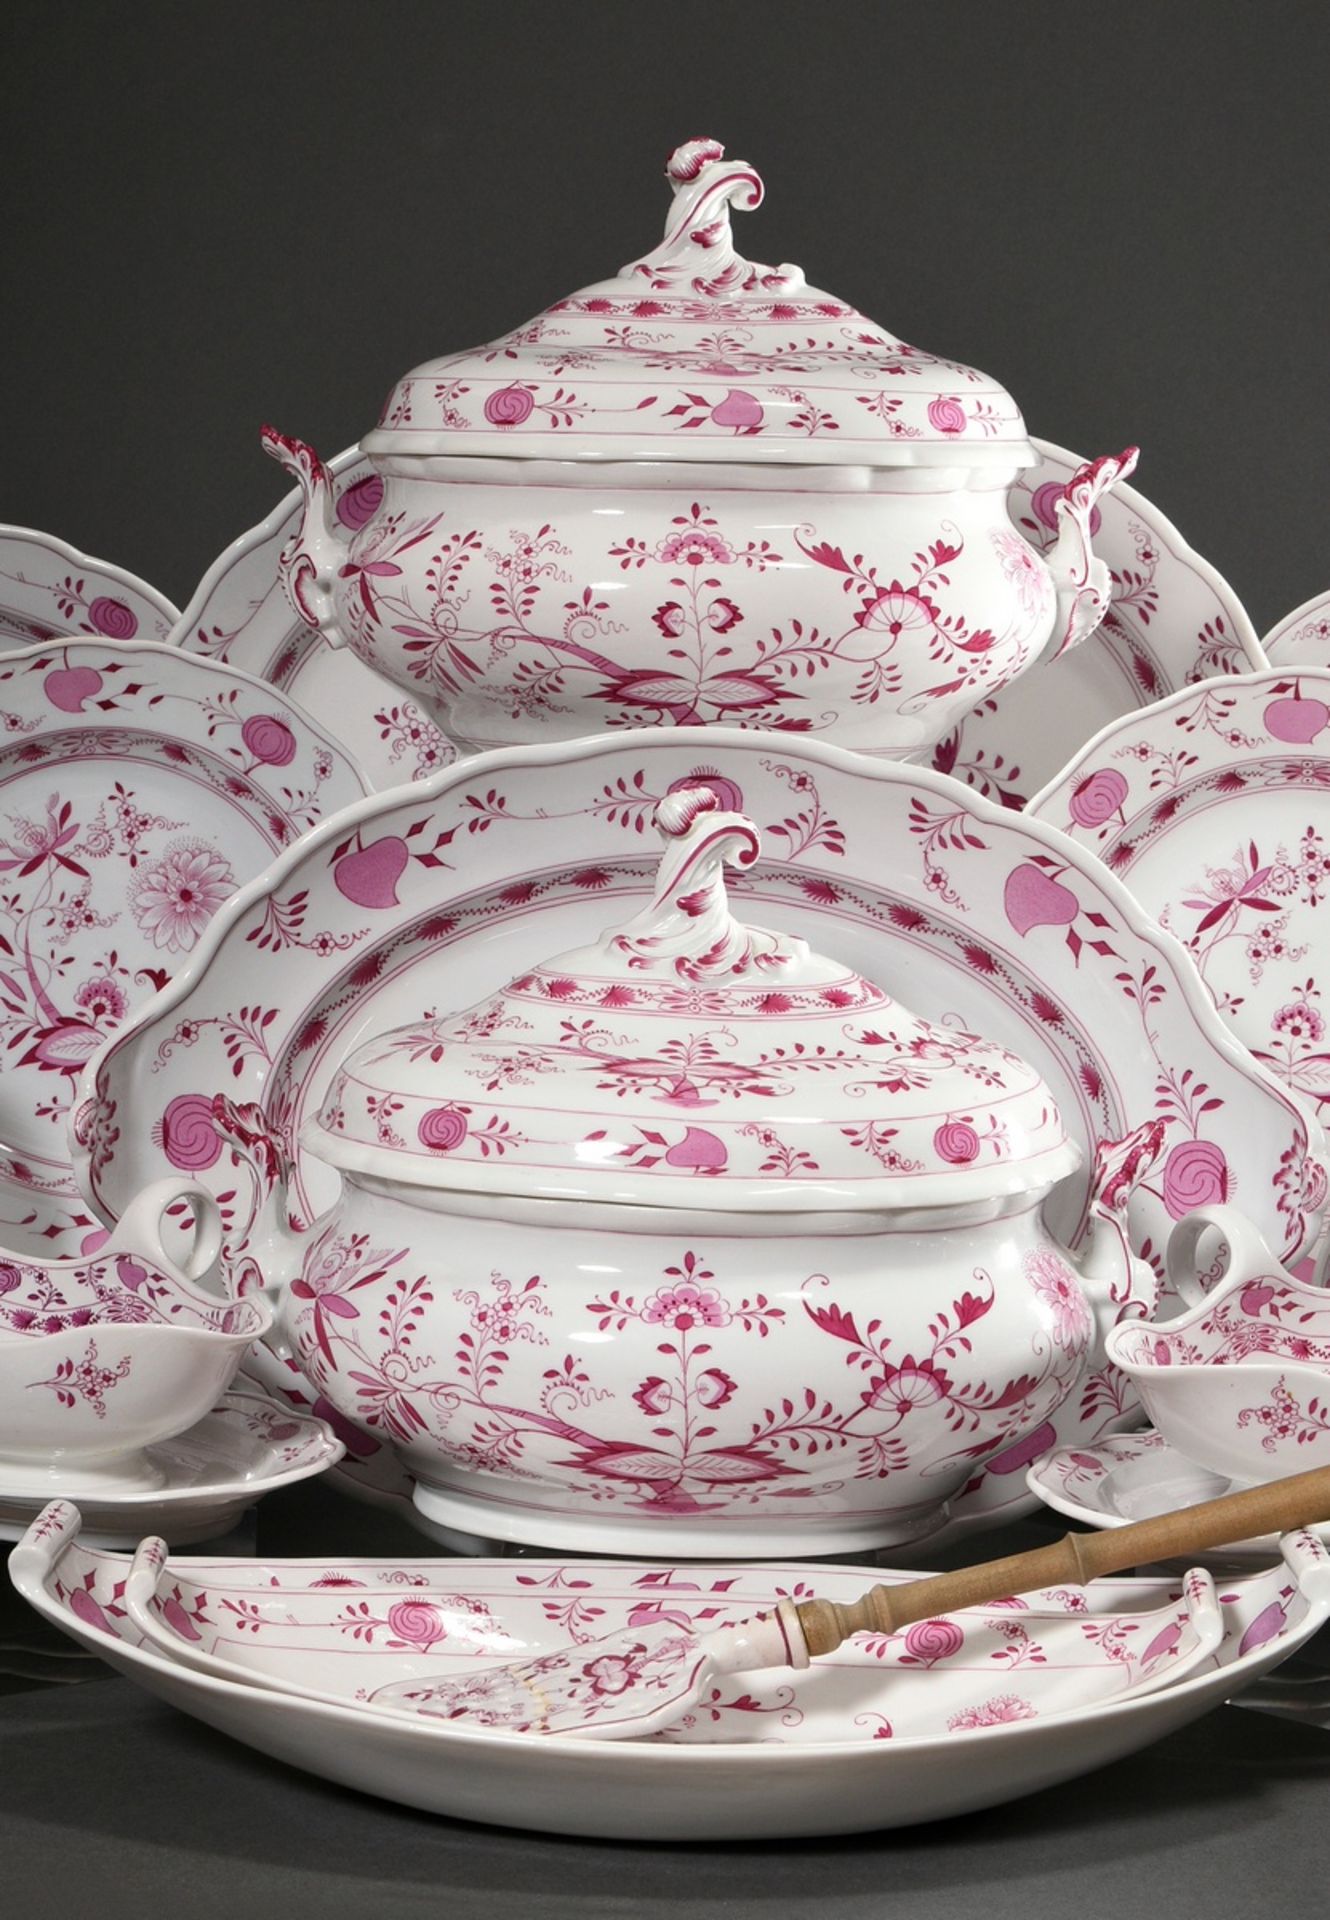 65 Pieces rare Meissen dinner service "Zwiebelmuster Pink", custom made around 1900, consisting of: